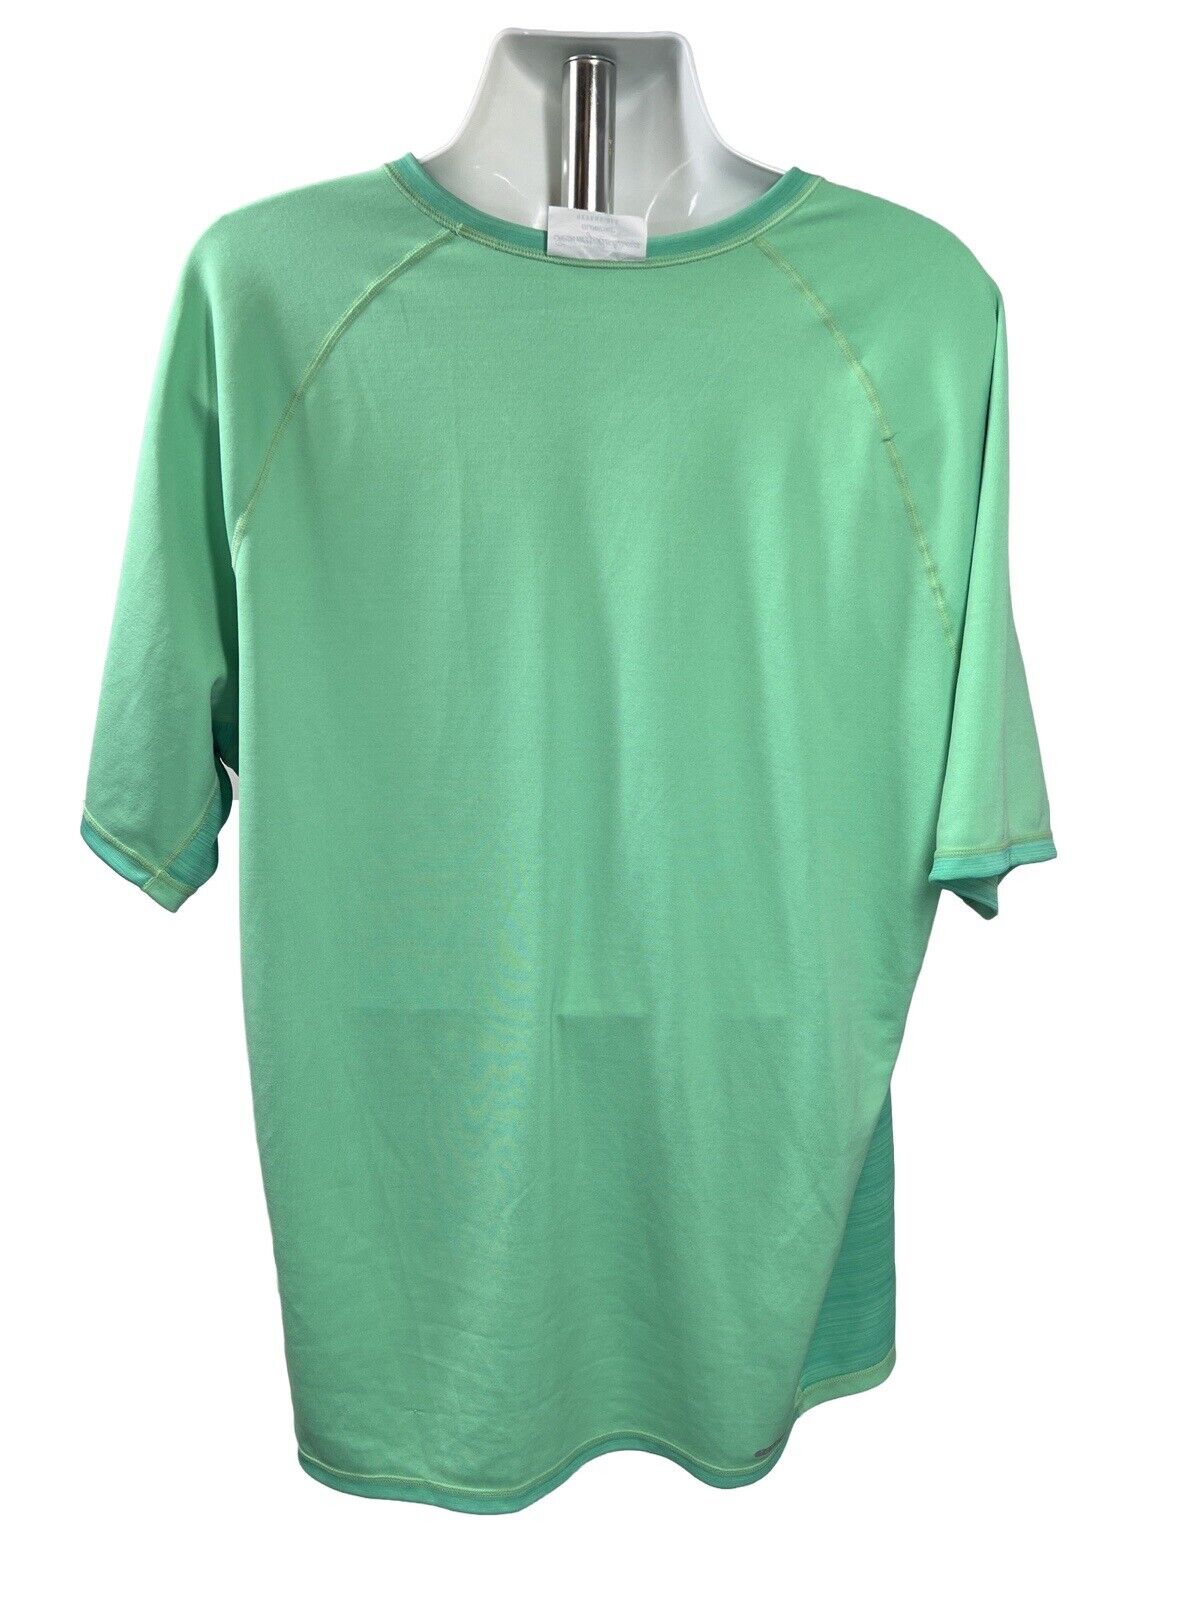 Tommy Bahama Men's Green Island Zone Reversible Short Sleeve Shirt - 3XL